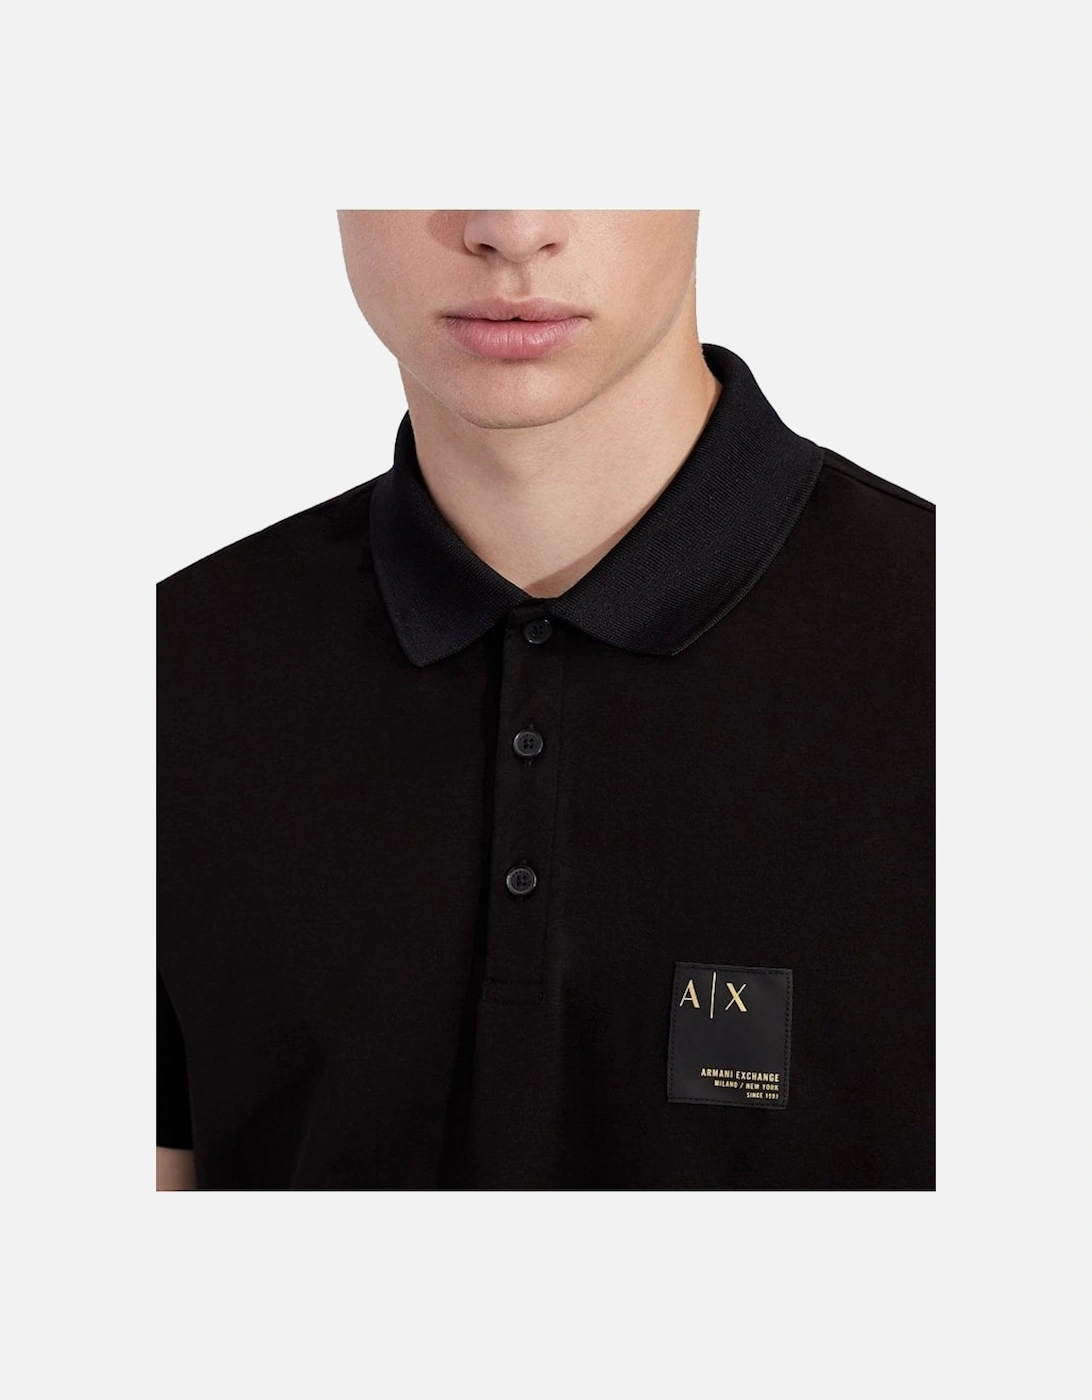 A|X Mens 3 Button Polo Shirt Black